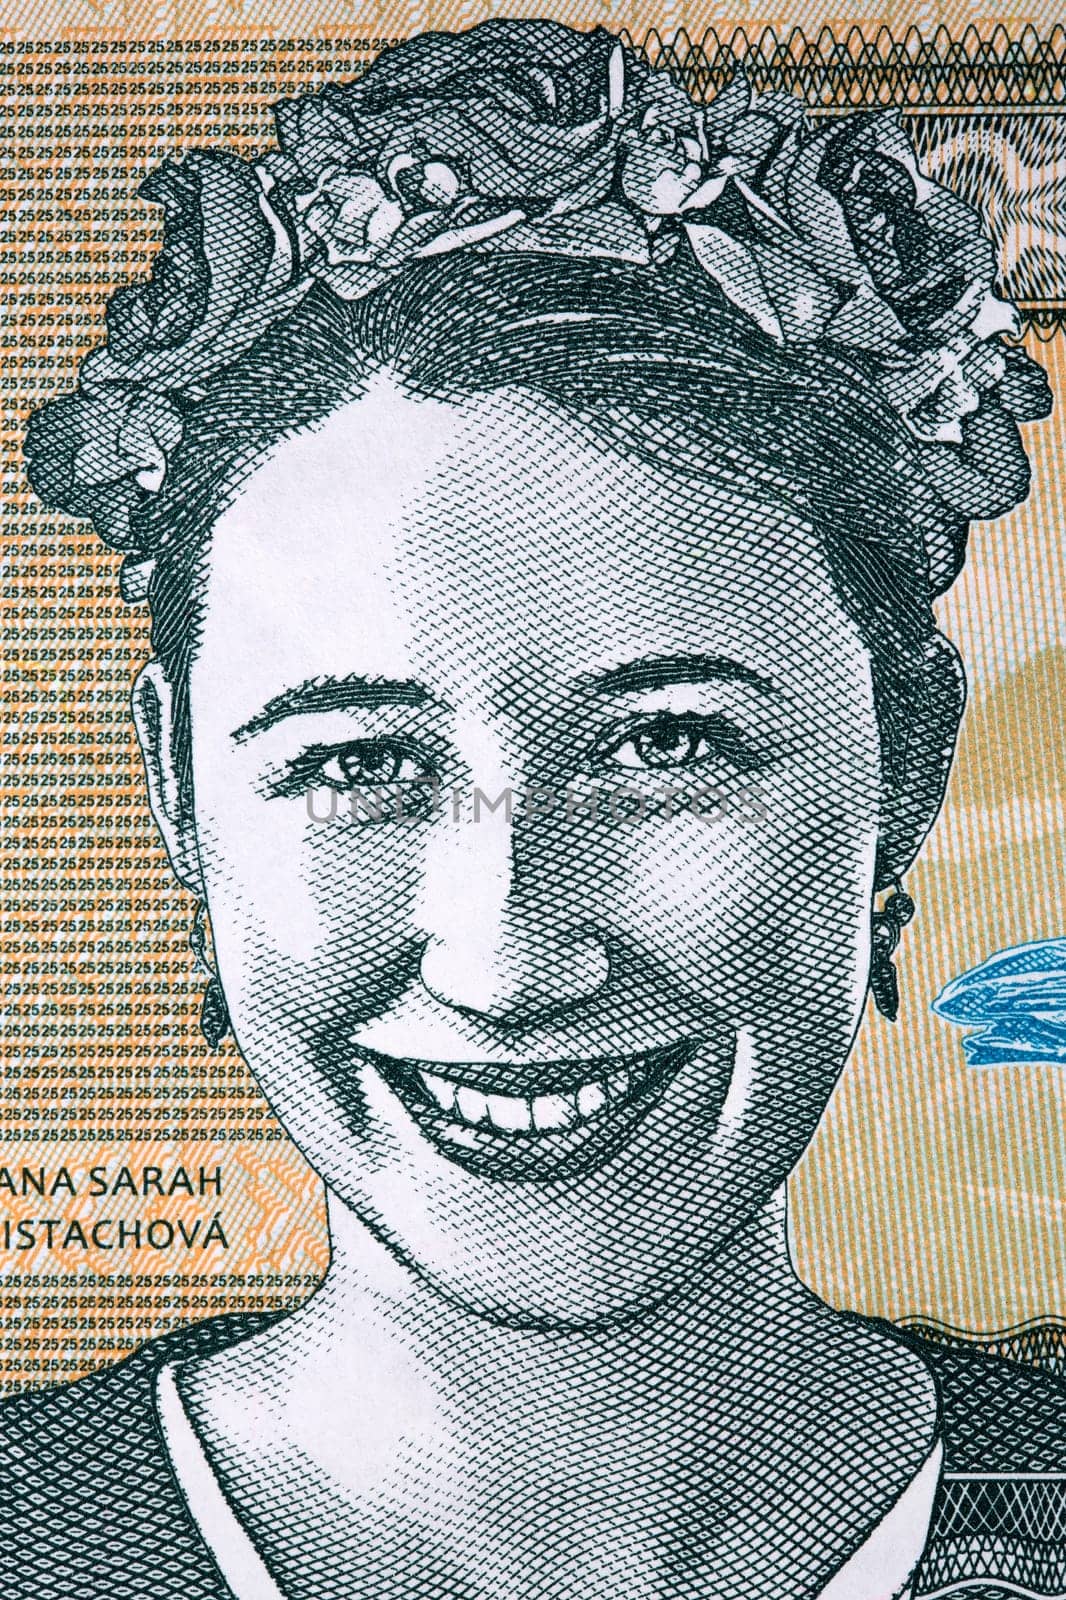 Ivana Sarah Pristachova a portrait from money by johan10